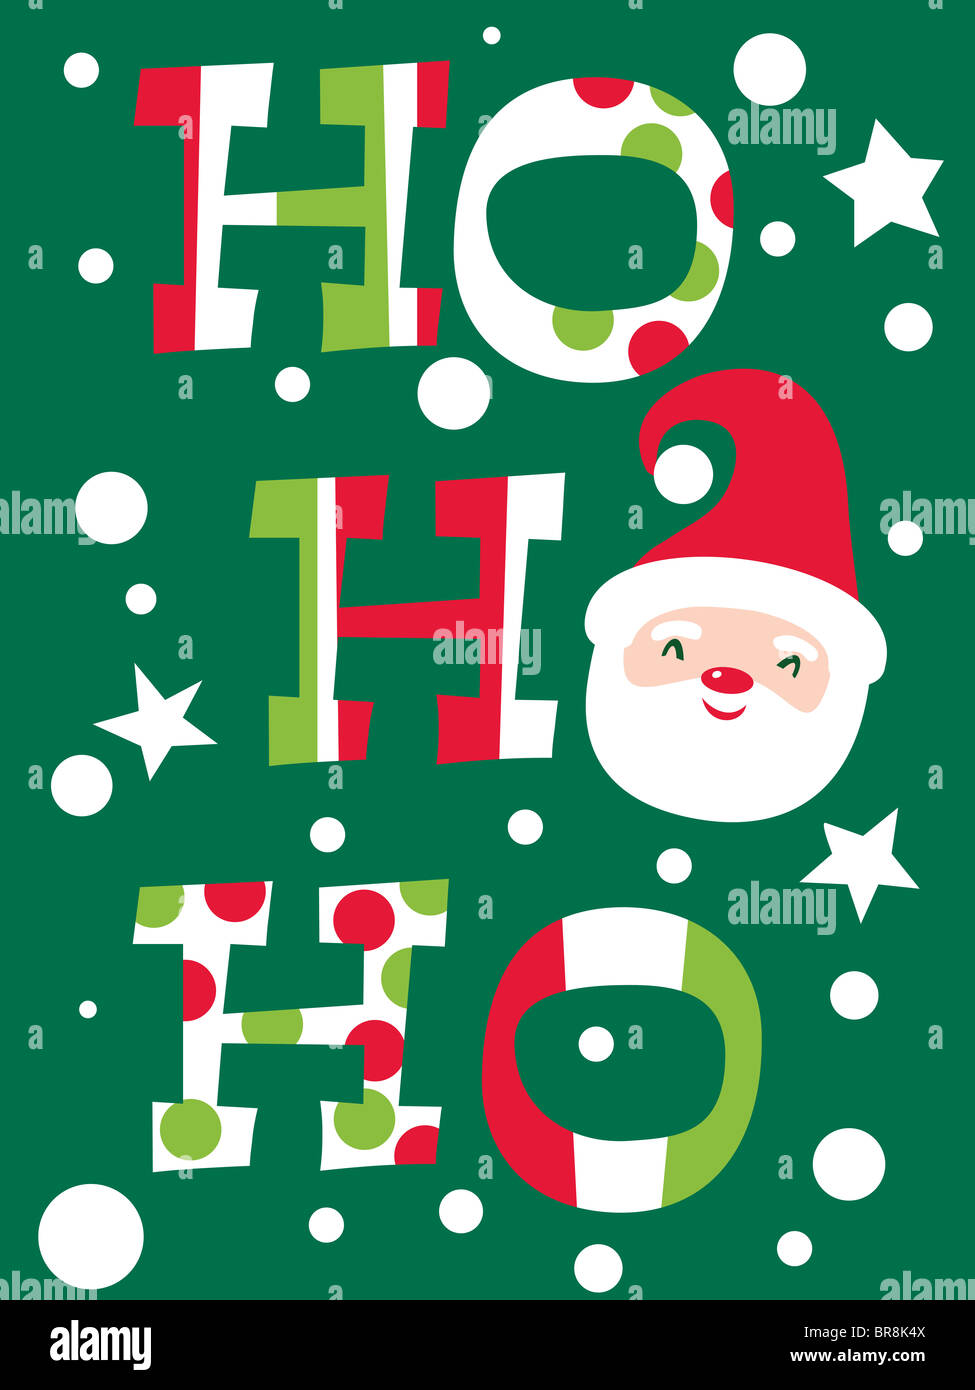 https://c8.alamy.com/comp/BR8K4X/a-christmas-based-illustration-with-the-words-ho-ho-ho-and-an-image-BR8K4X.jpg